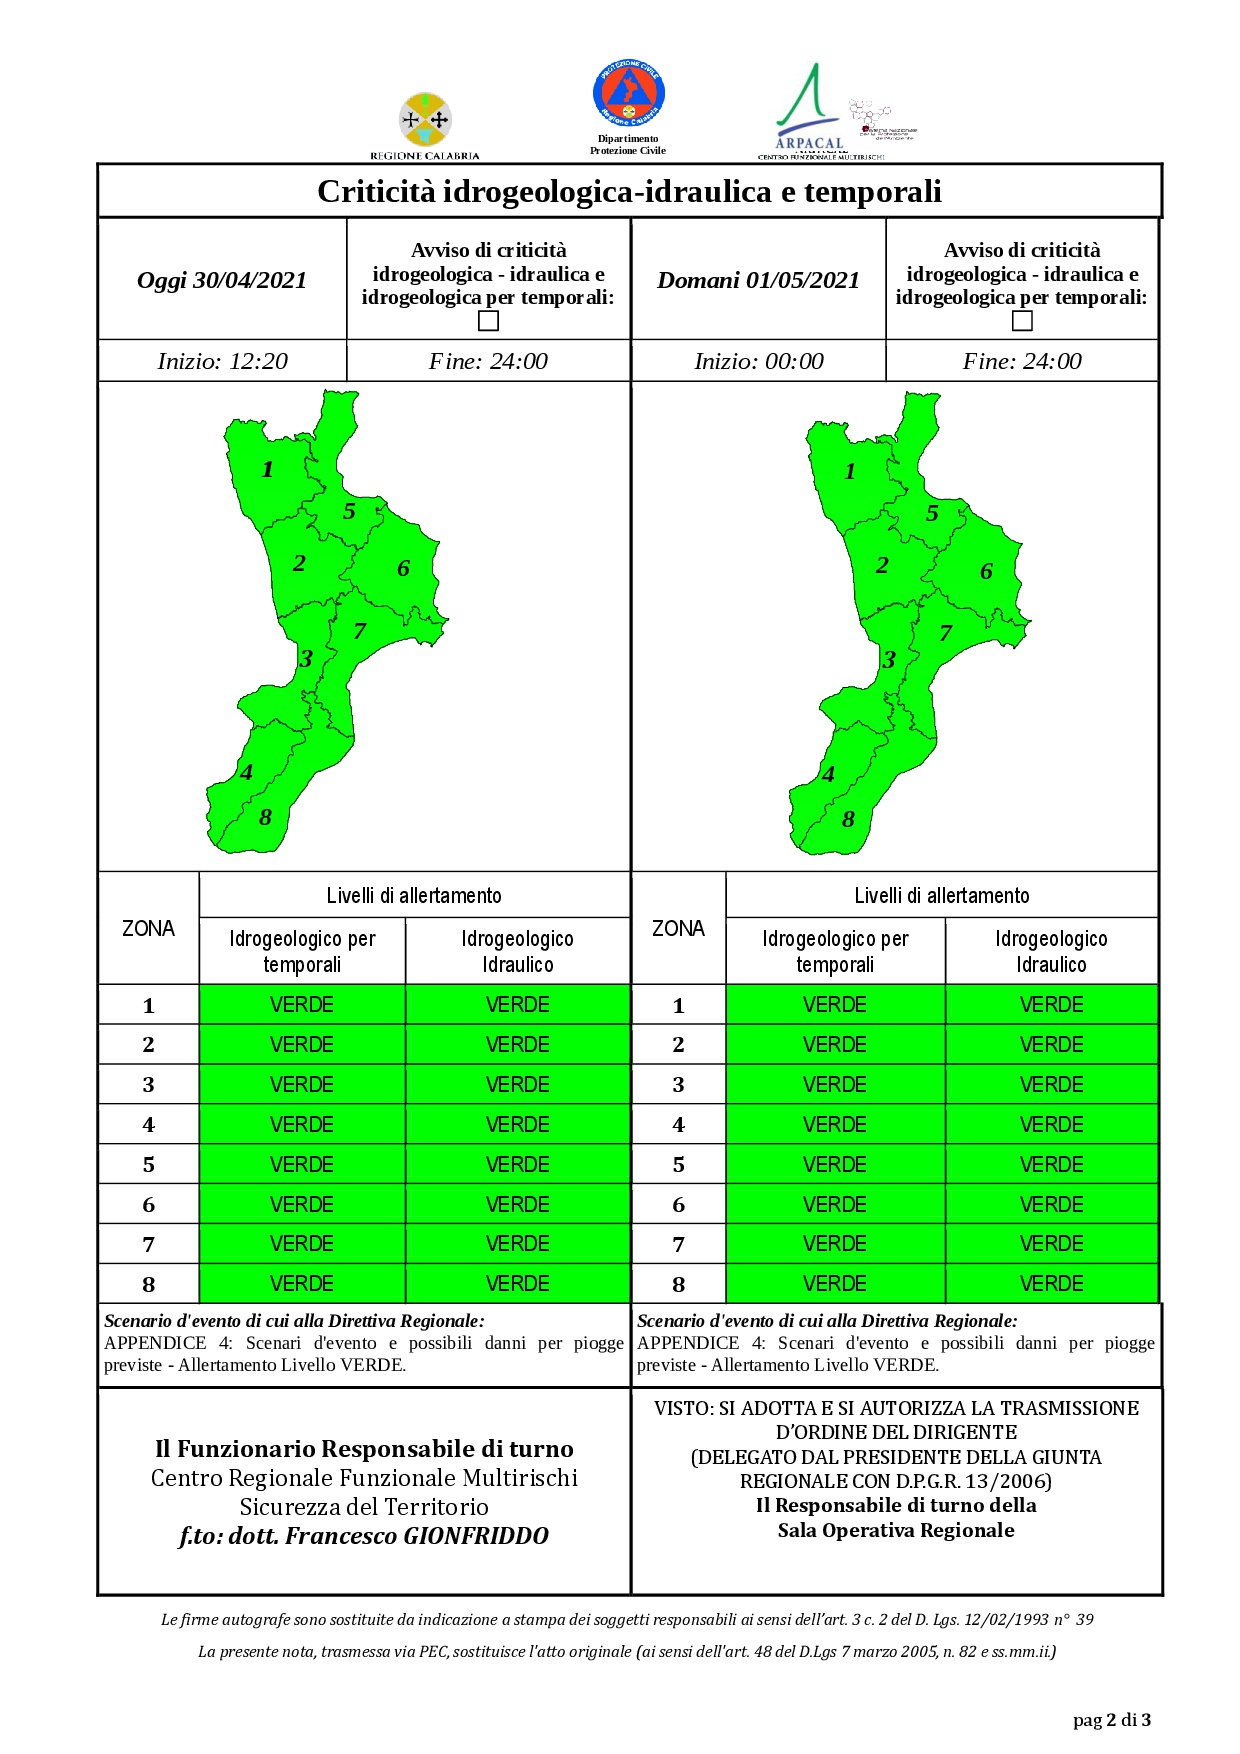 Criticità idrogeologica-idraulica e temporali in Calabria 30-04-2021